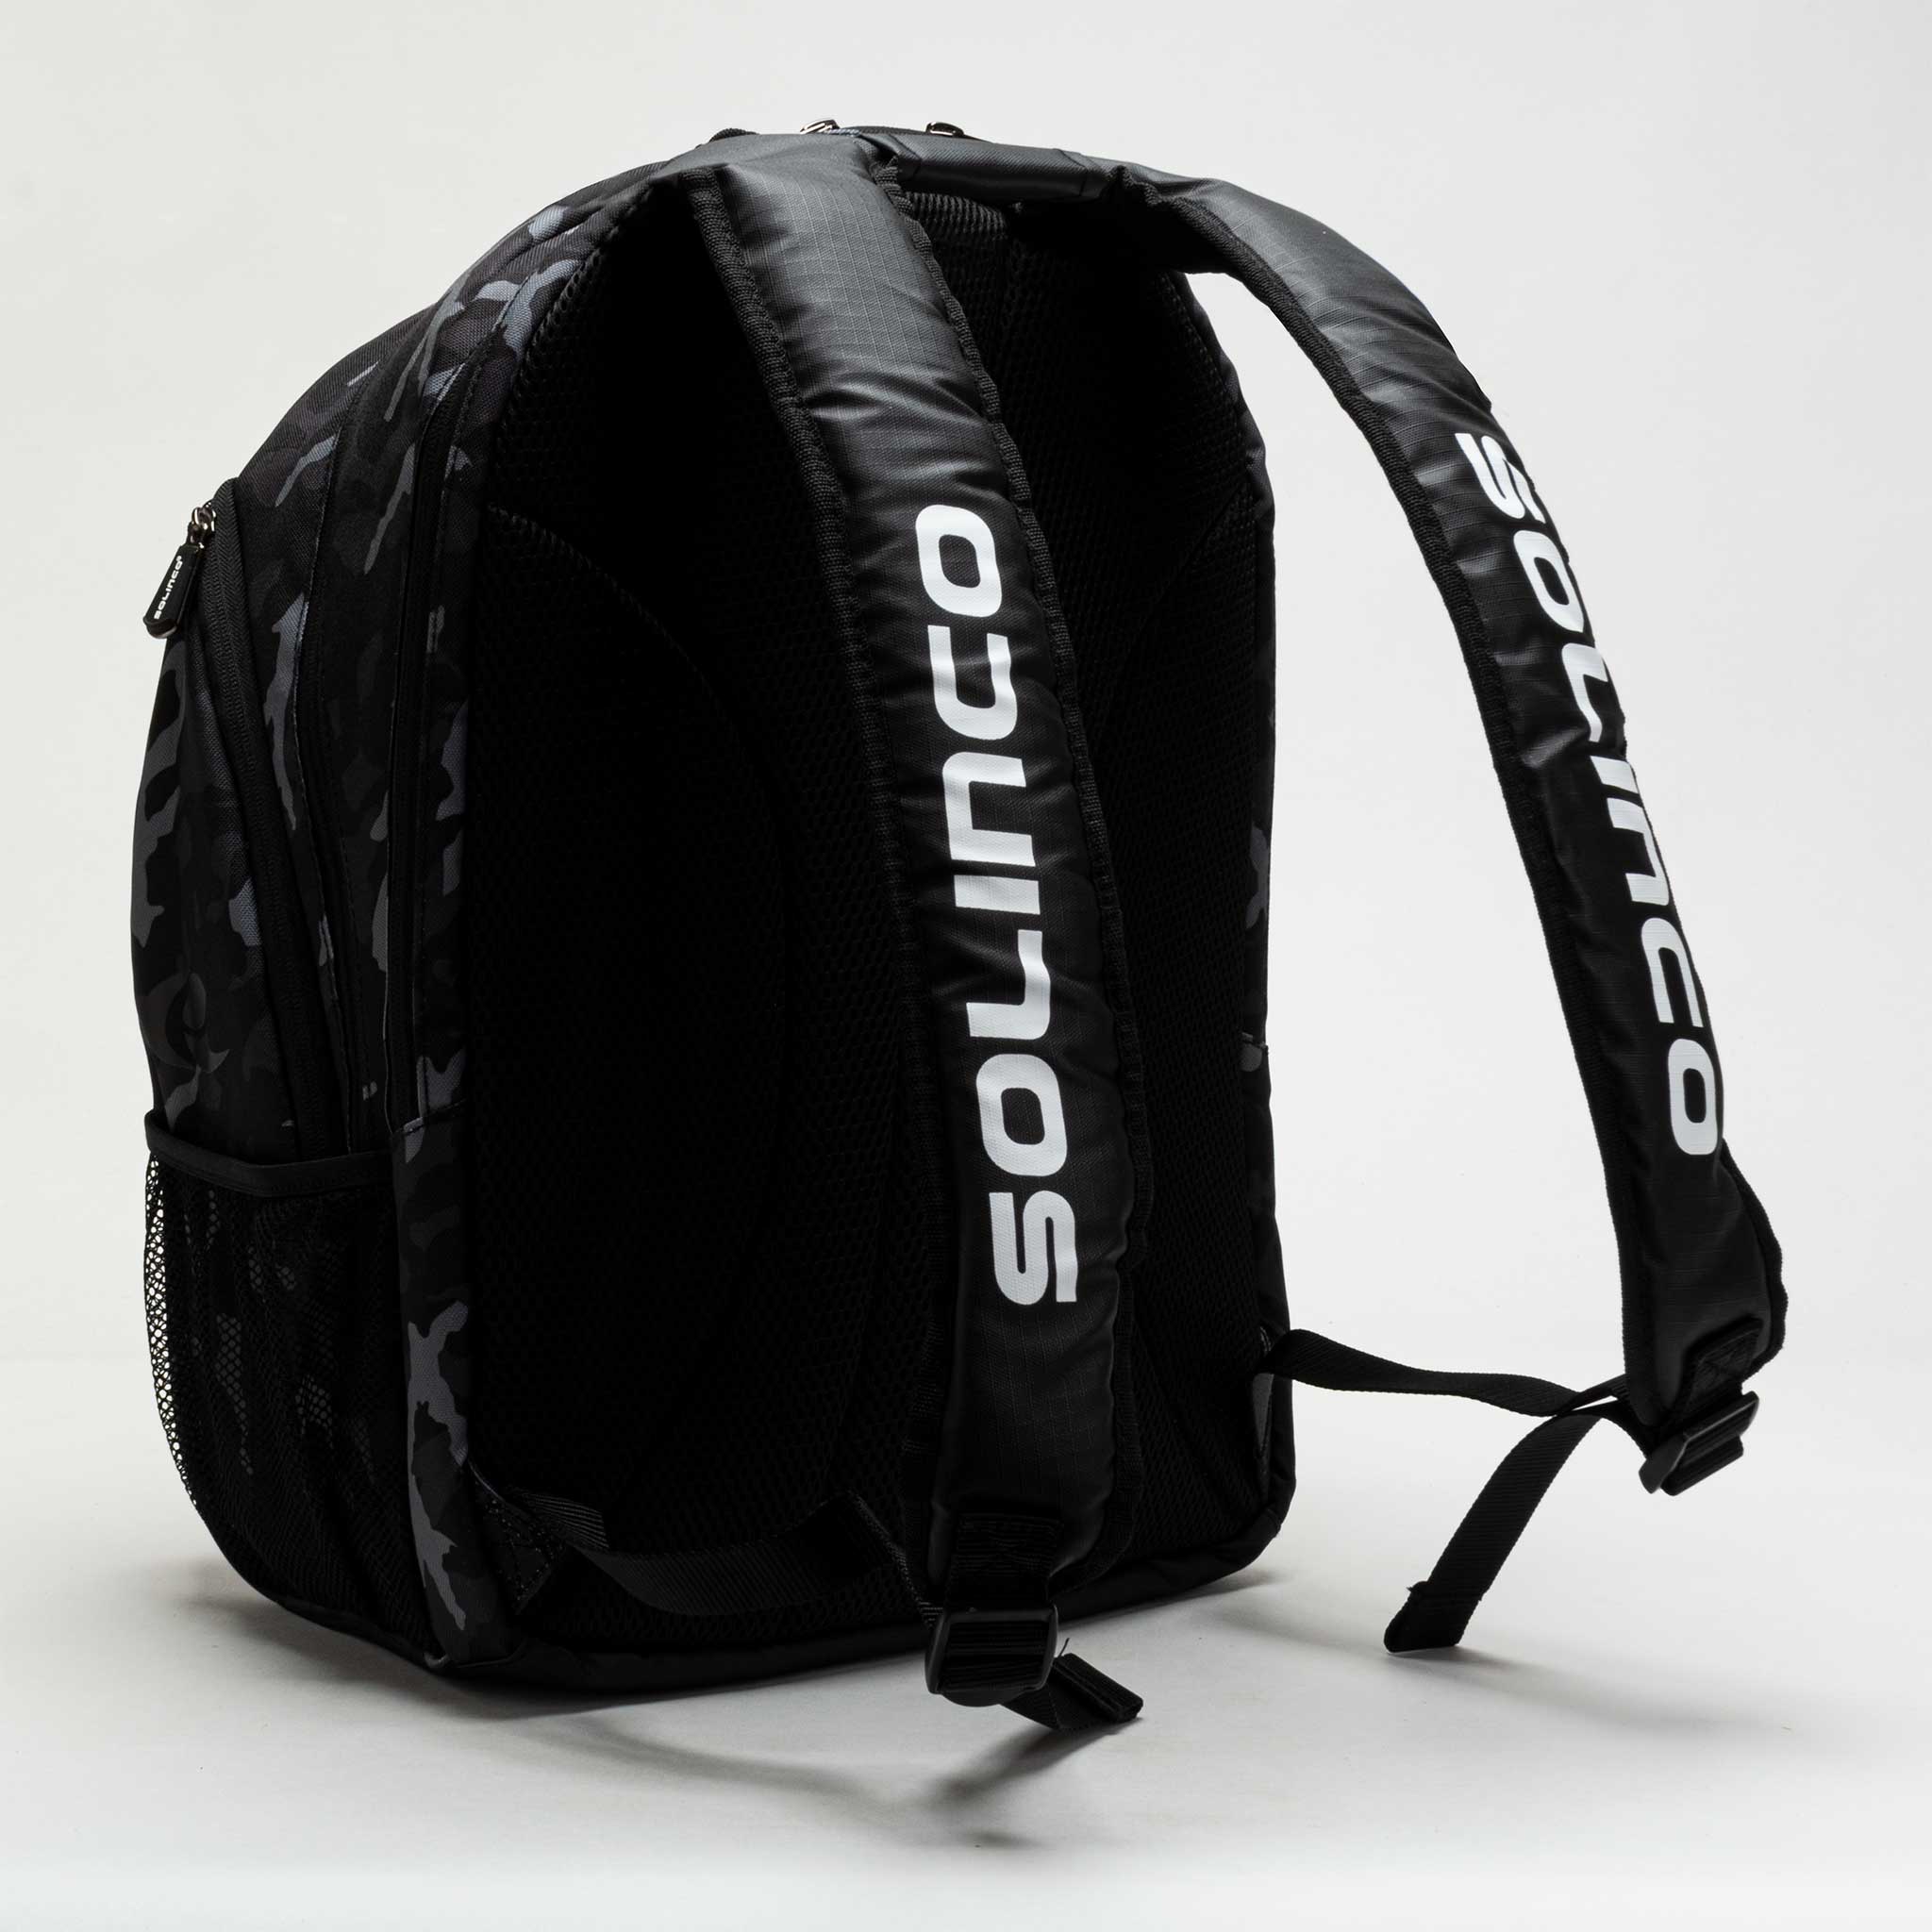 Solinco Tour Backpack Black Camo